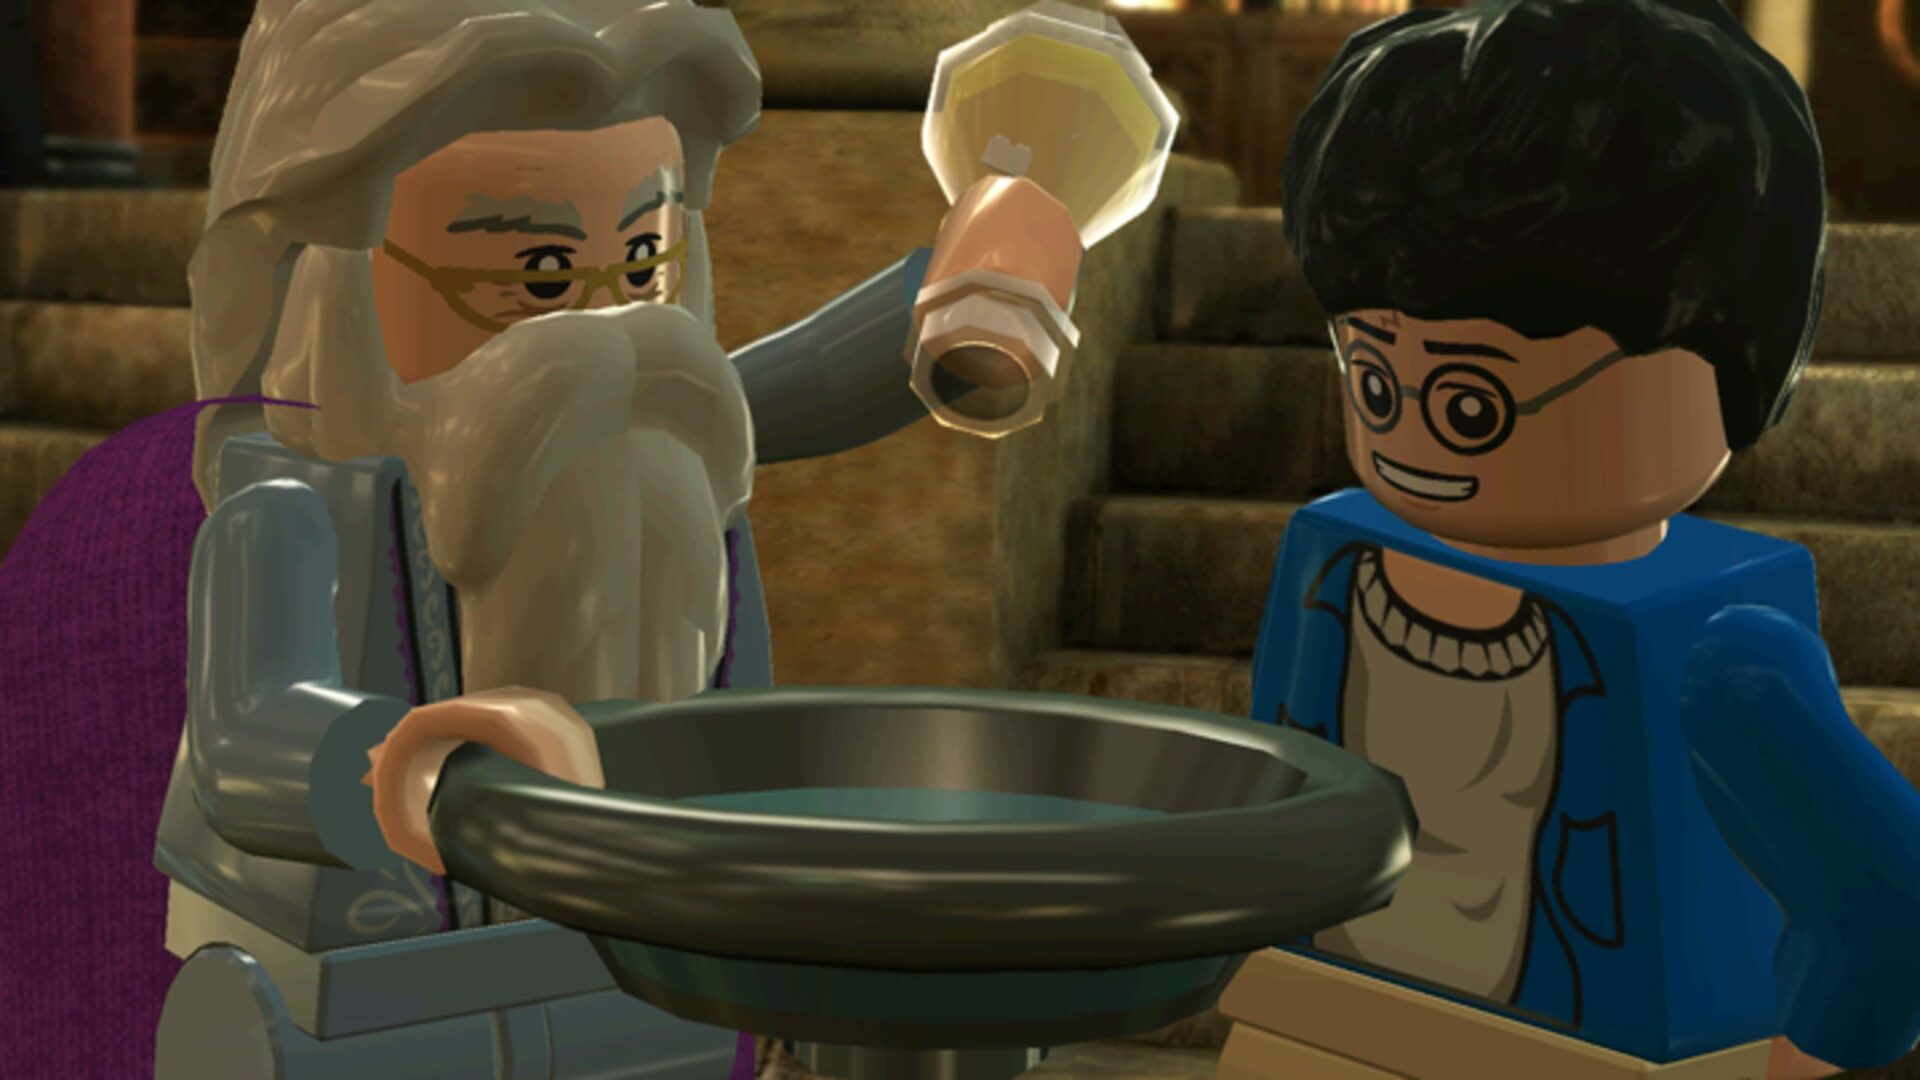 LEGO Harry Potter: Years 5-7 Steam CD Key